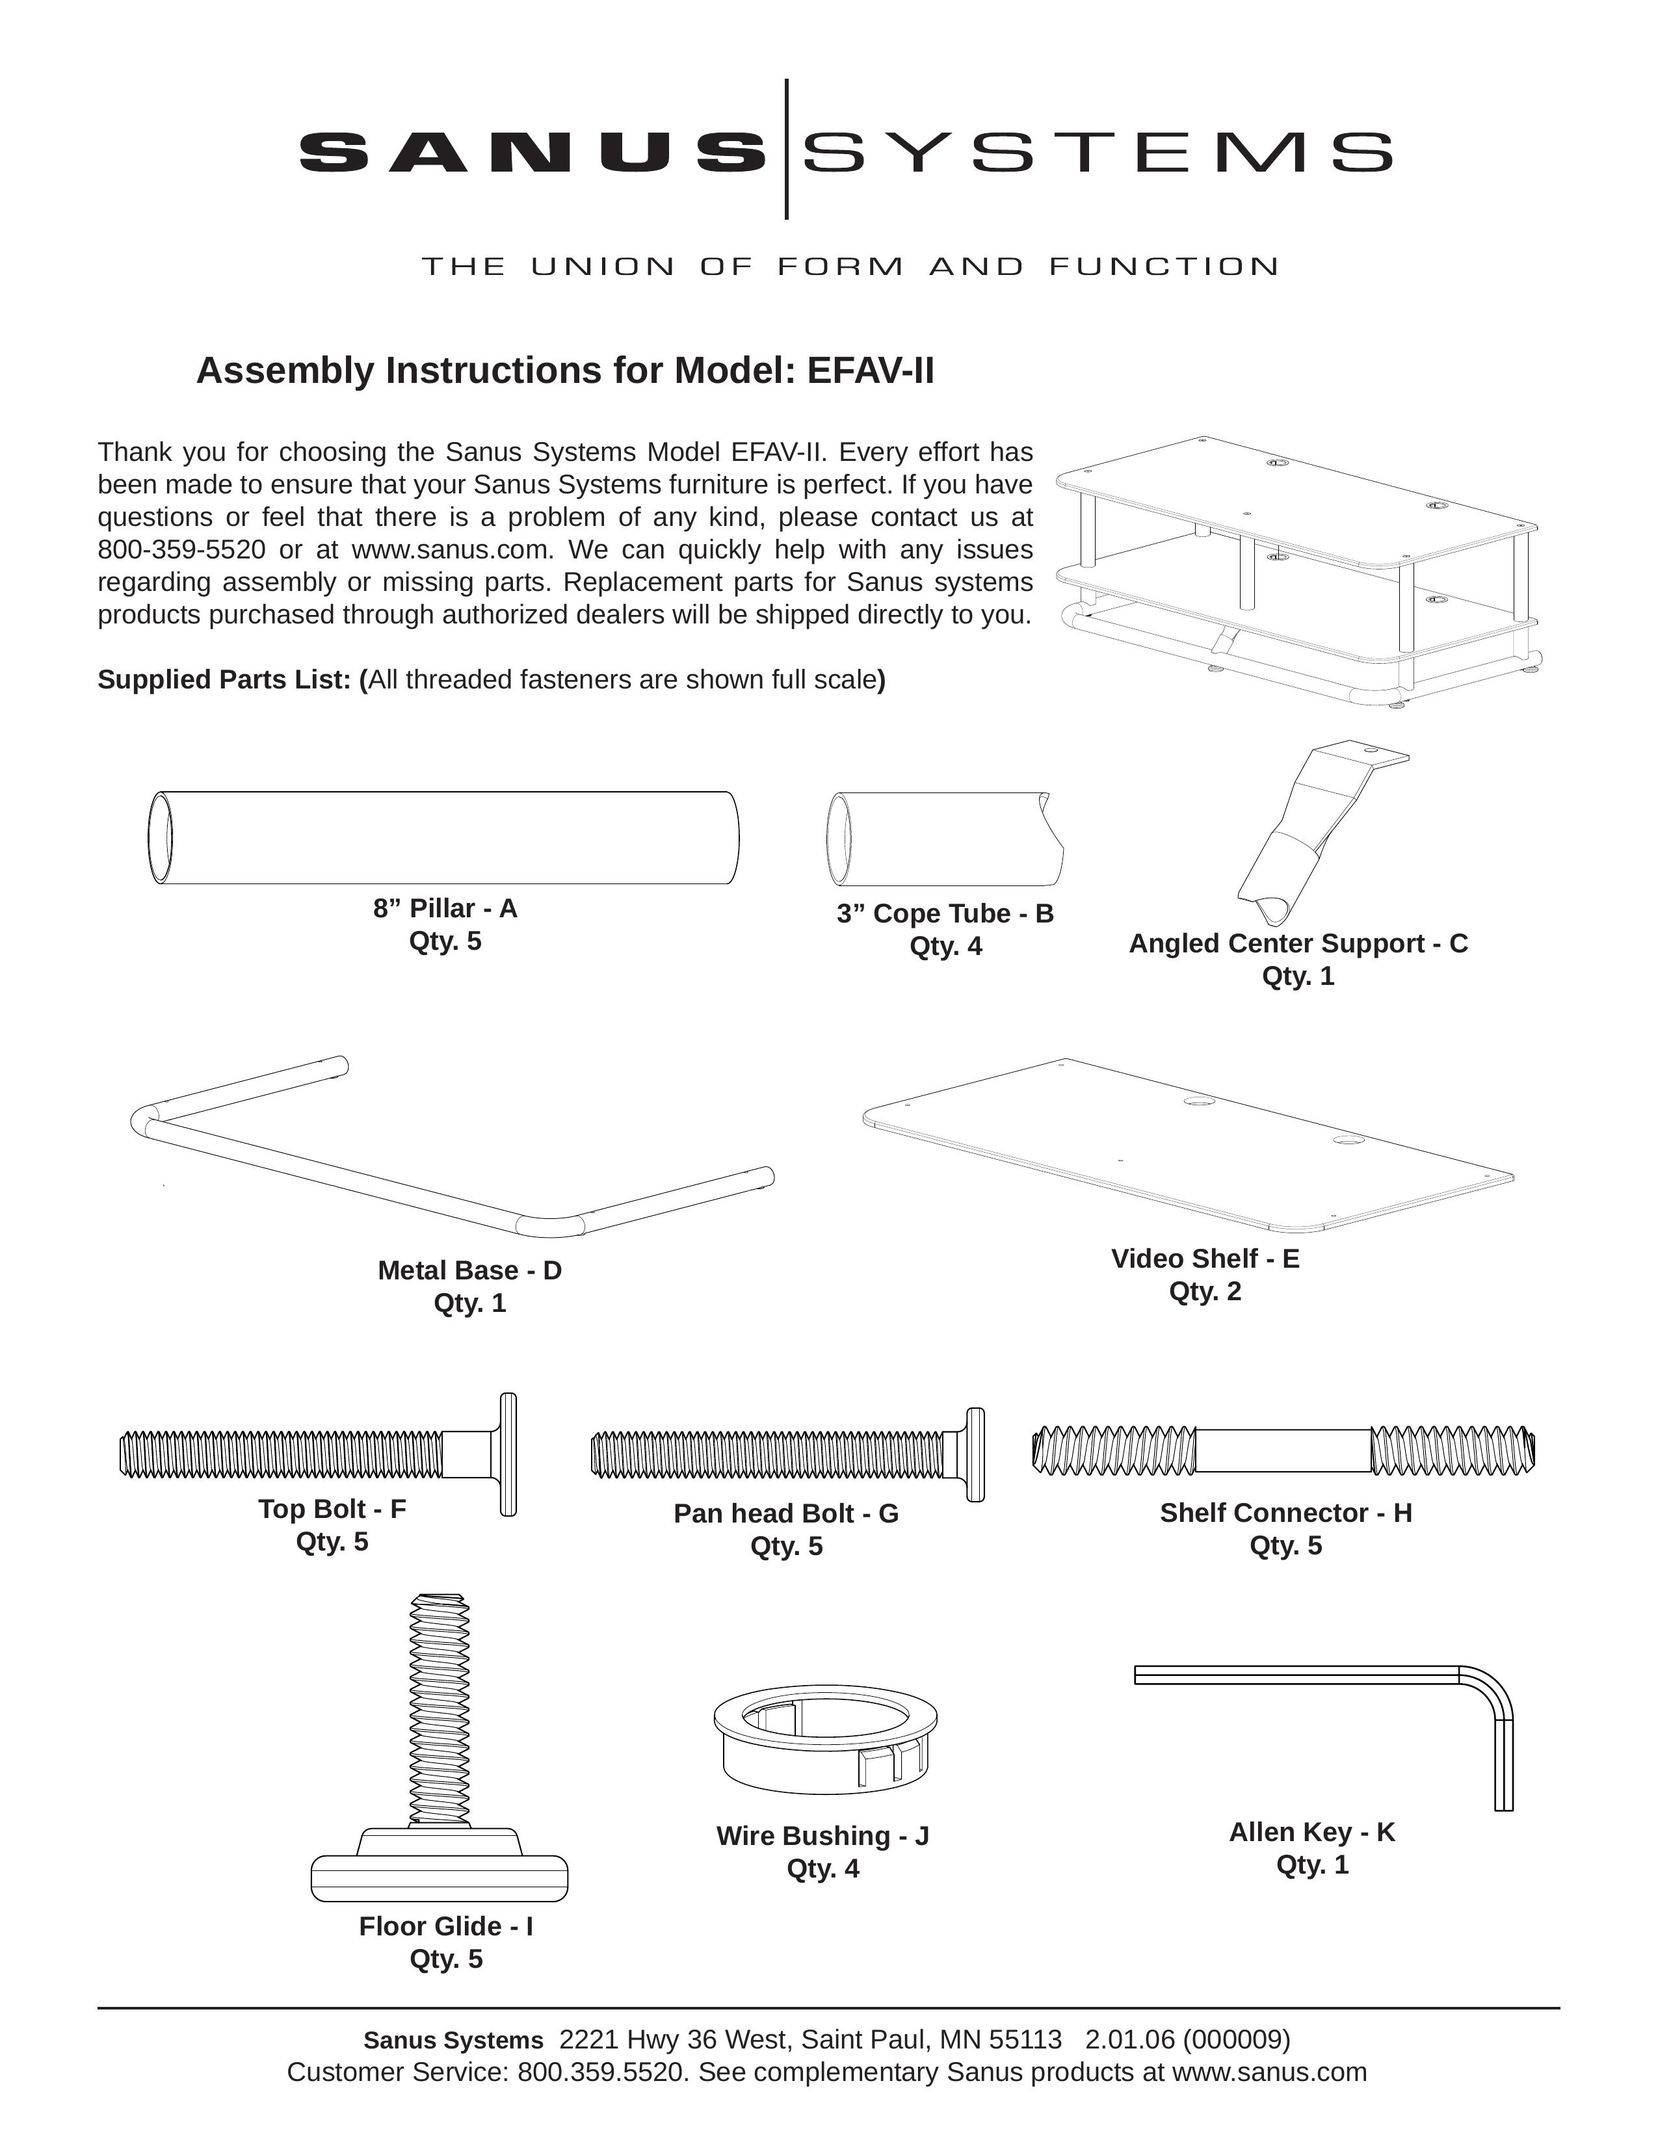 Sanus Systems EFAV-II Indoor Furnishings User Manual